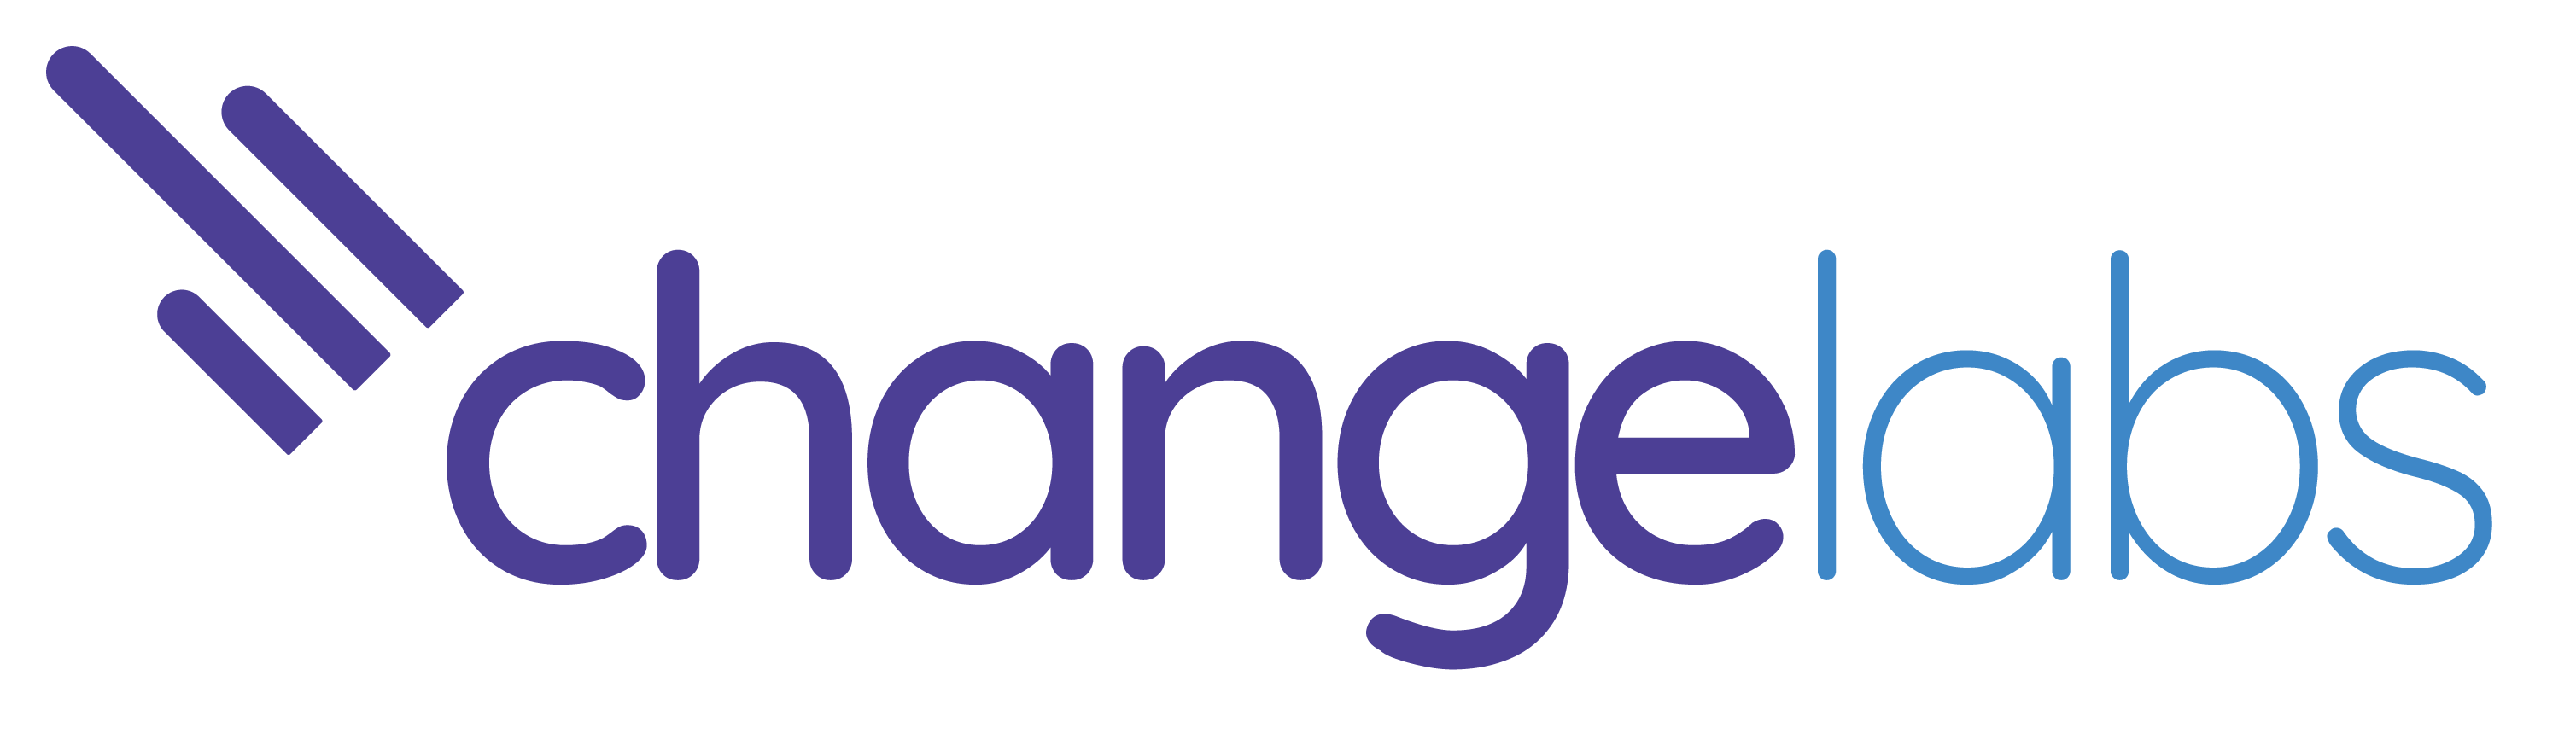 Changelabs logo